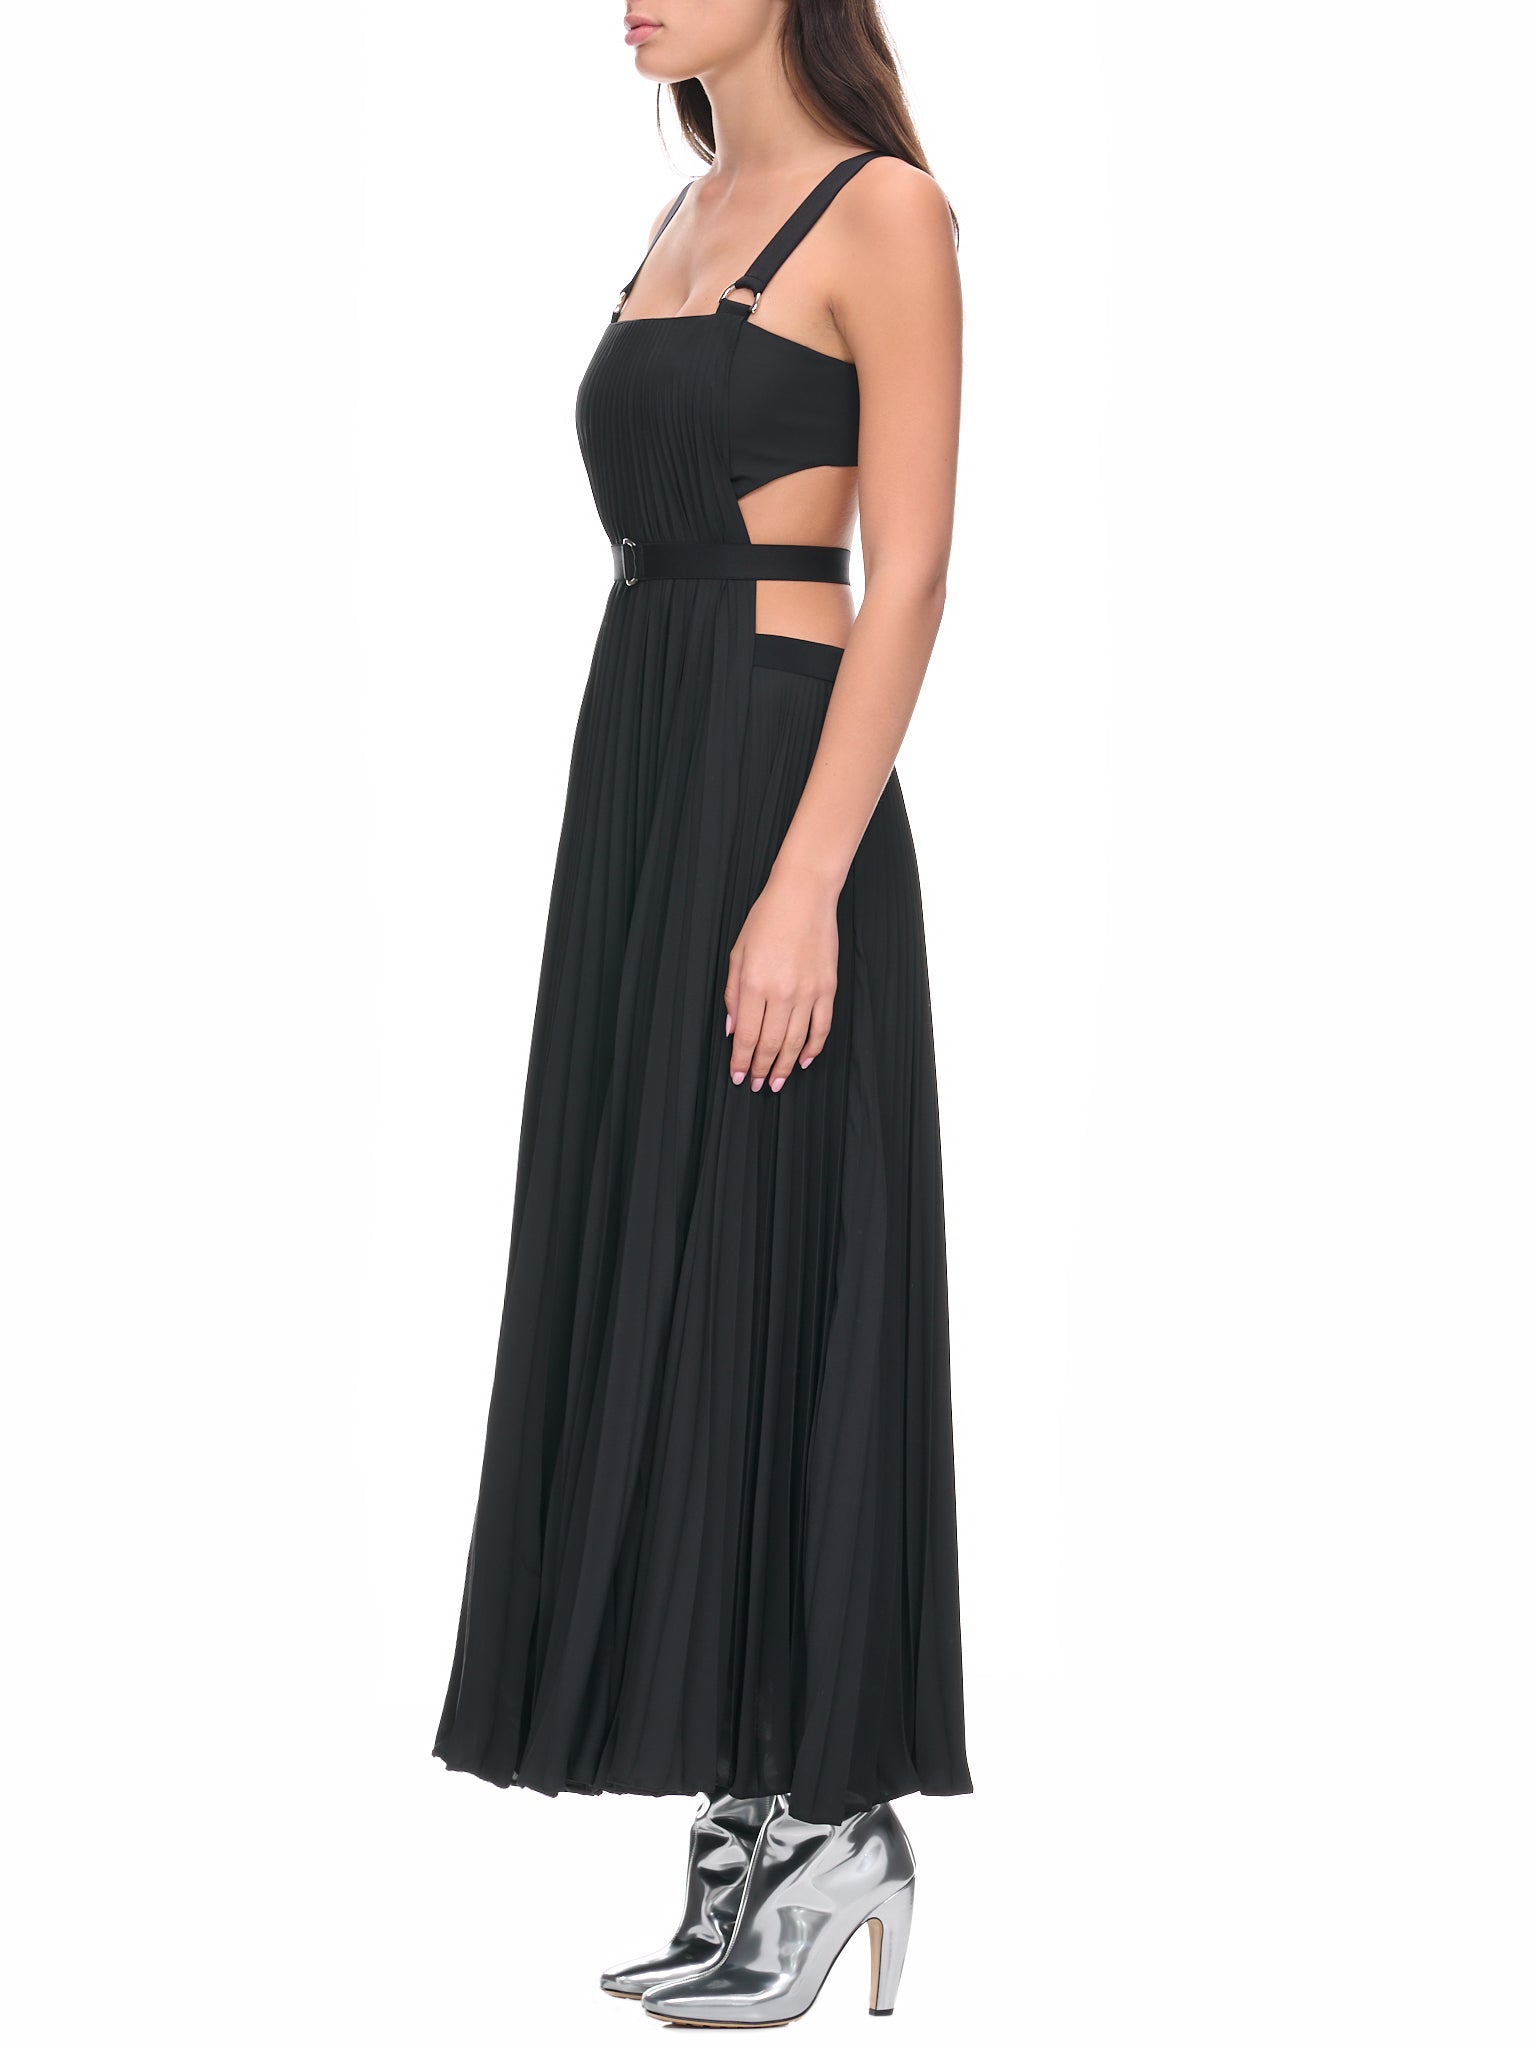 Pleated Dress (DR3996-BLACK)